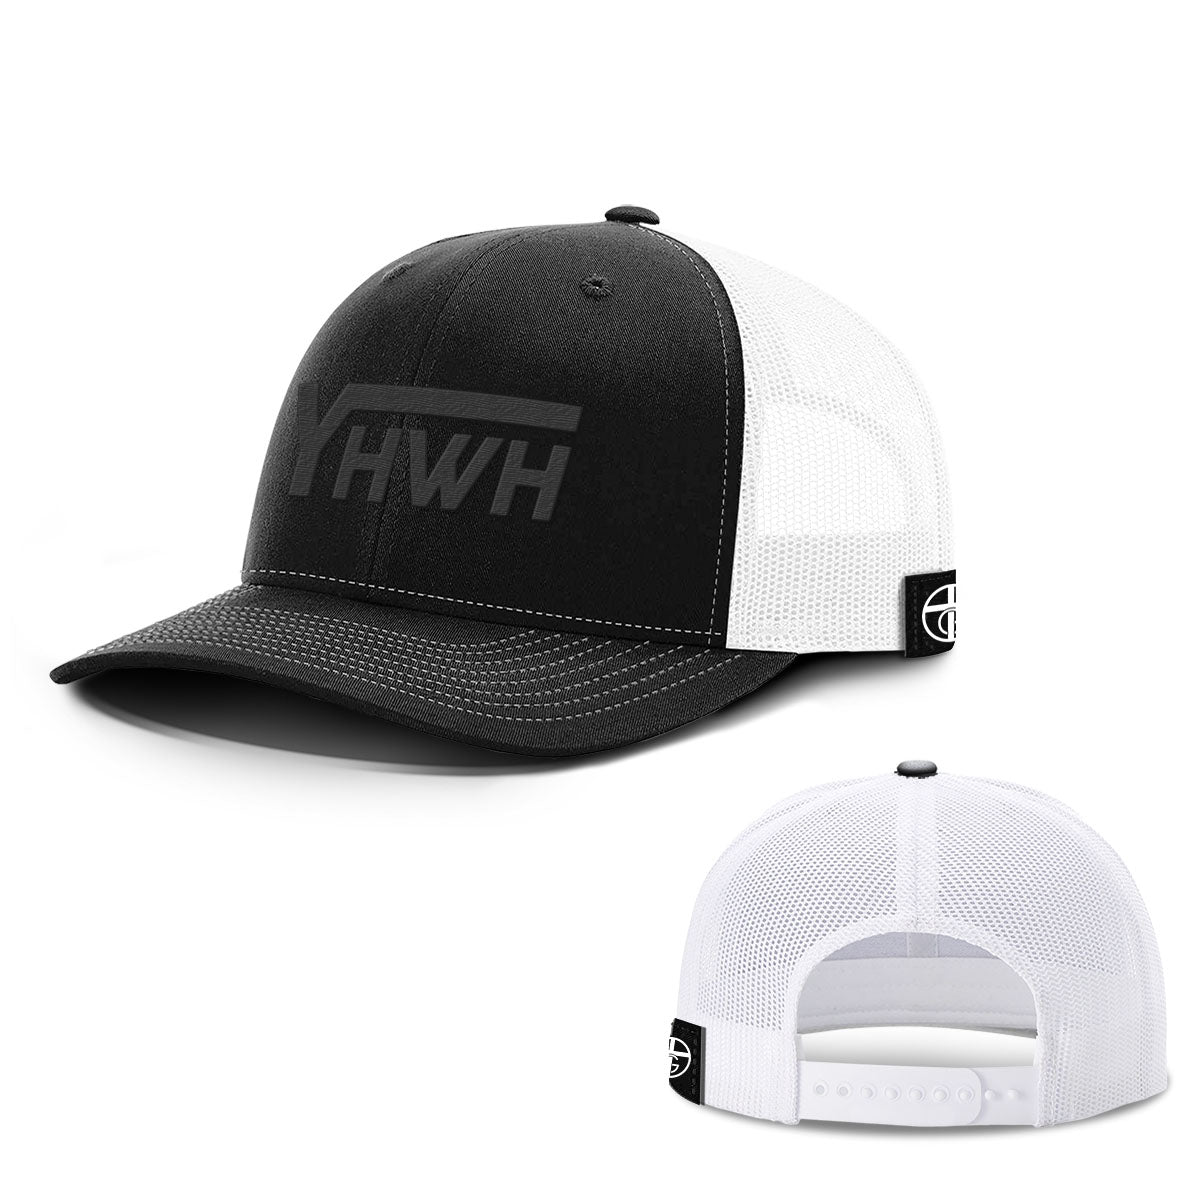 YHWH Blackout Version Hats